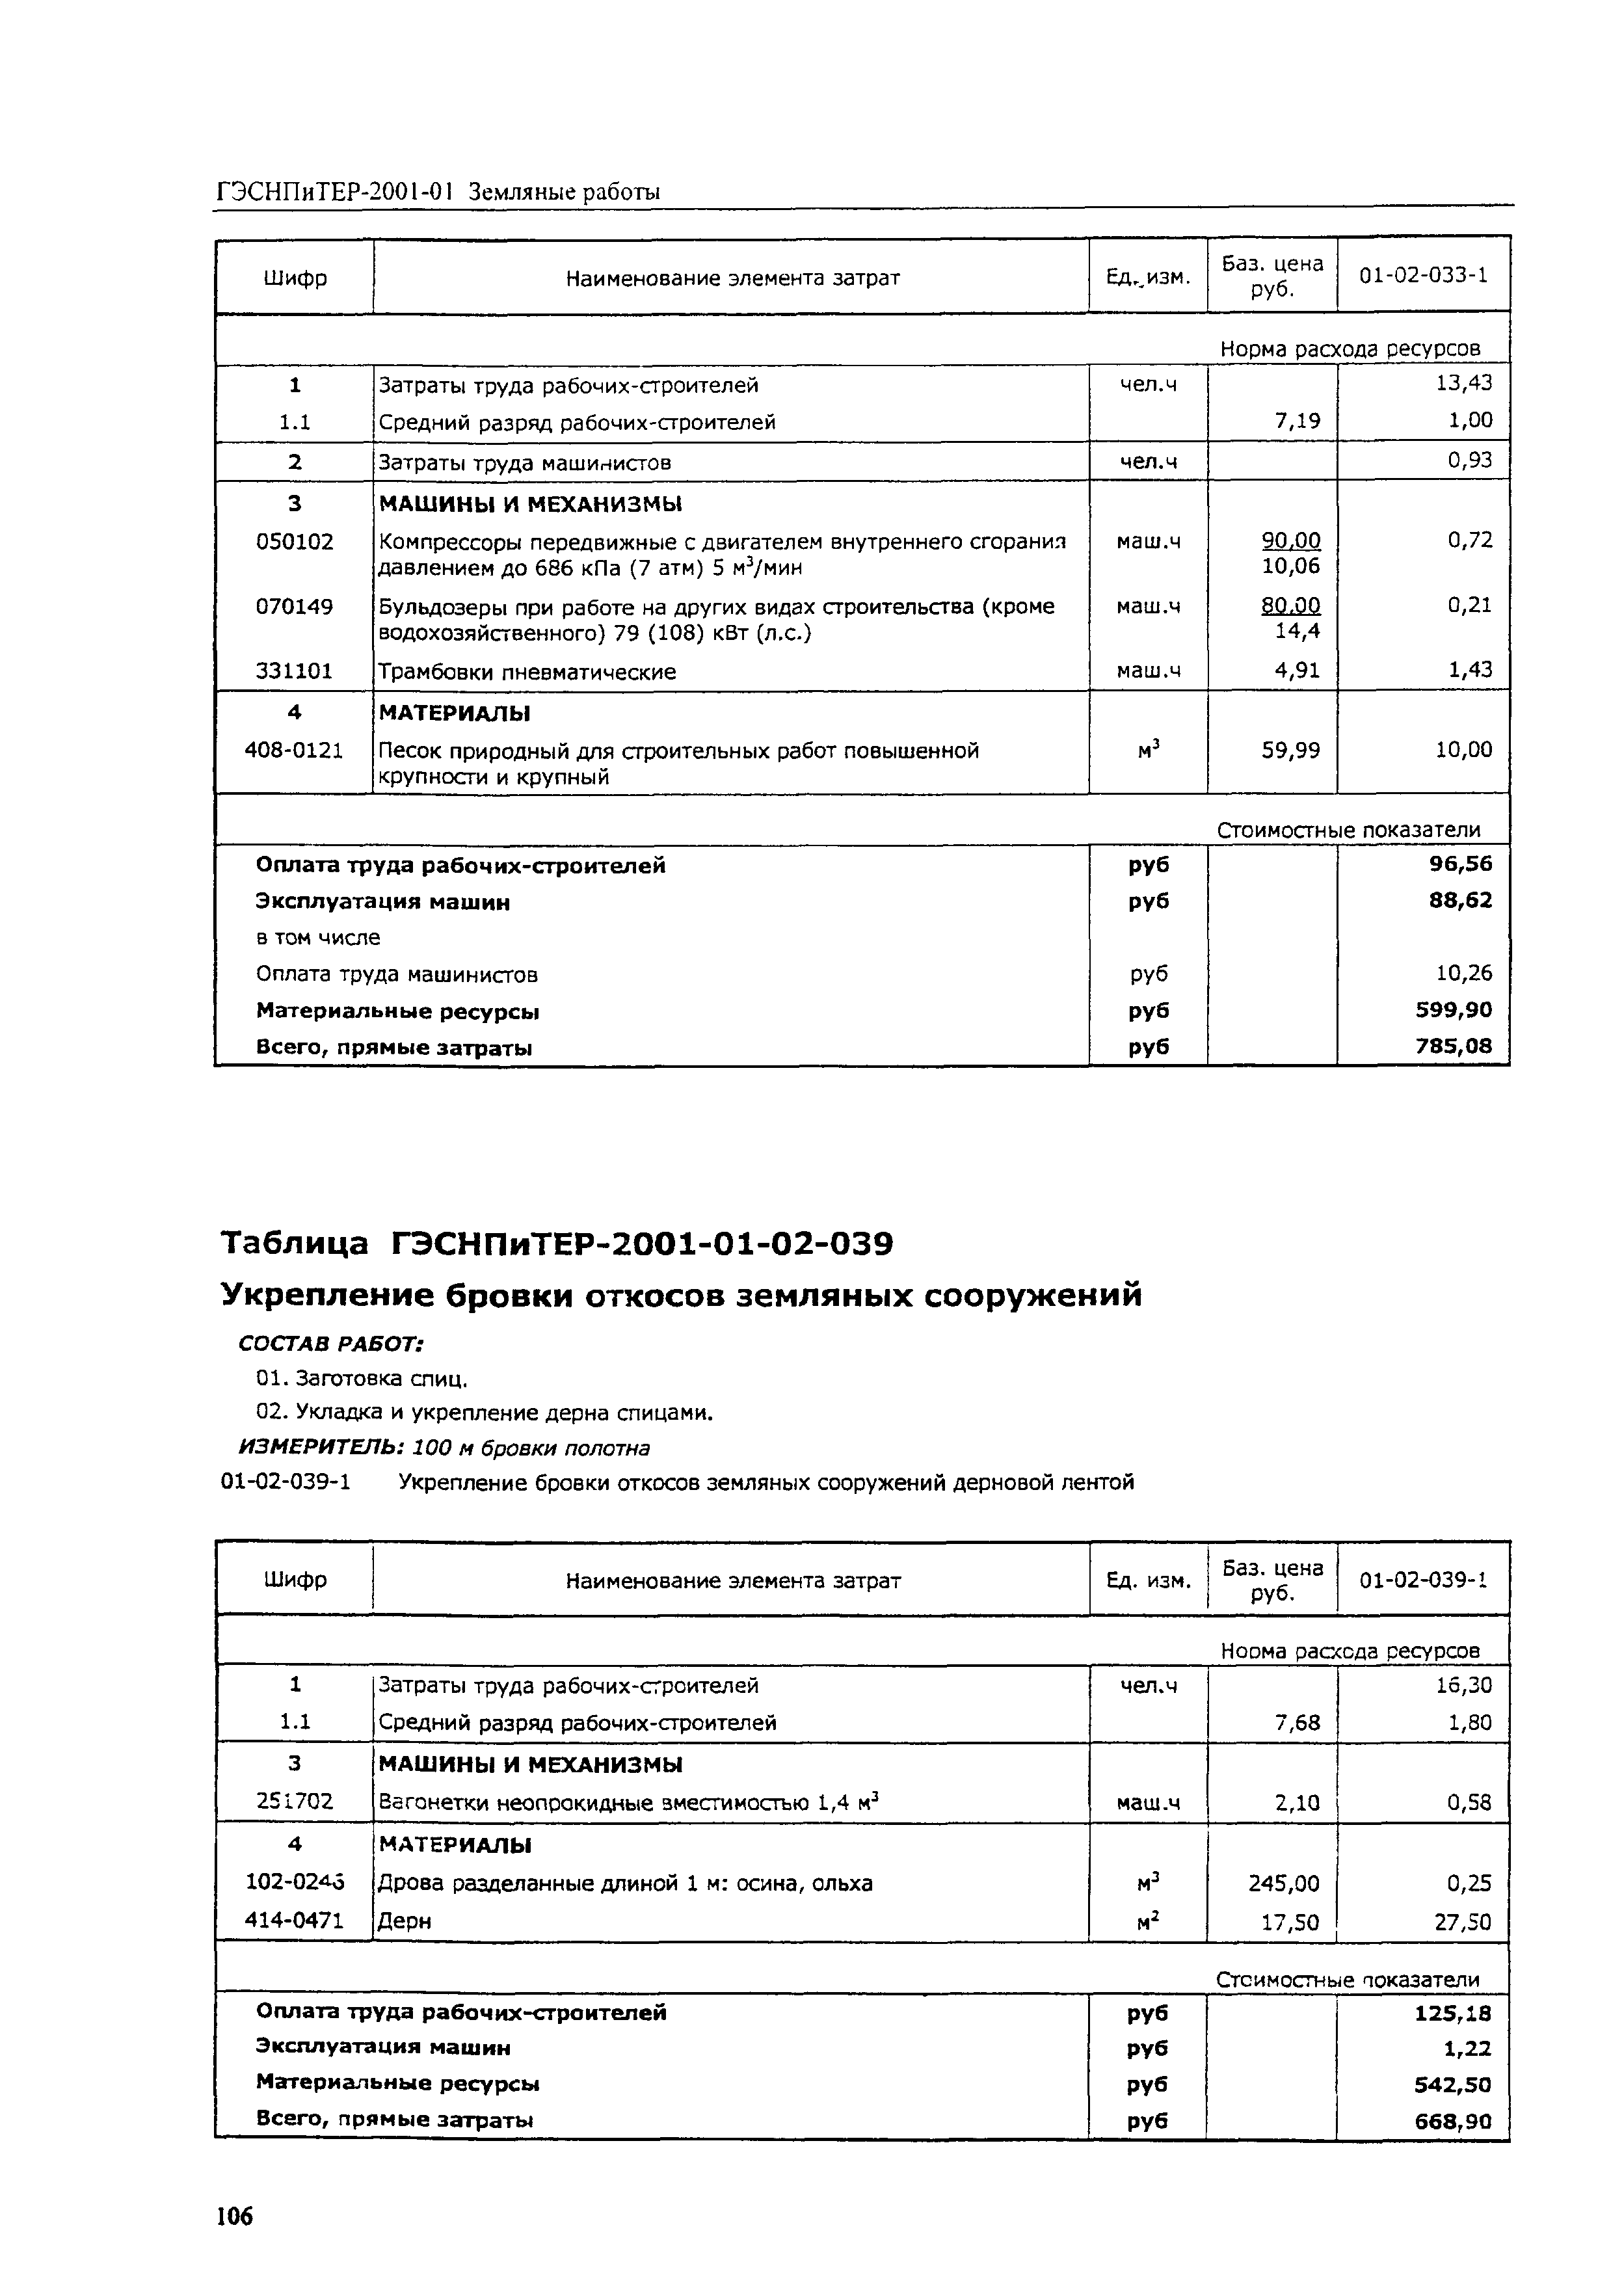 ГЭСНПиТЕР 2001-01 (IV)